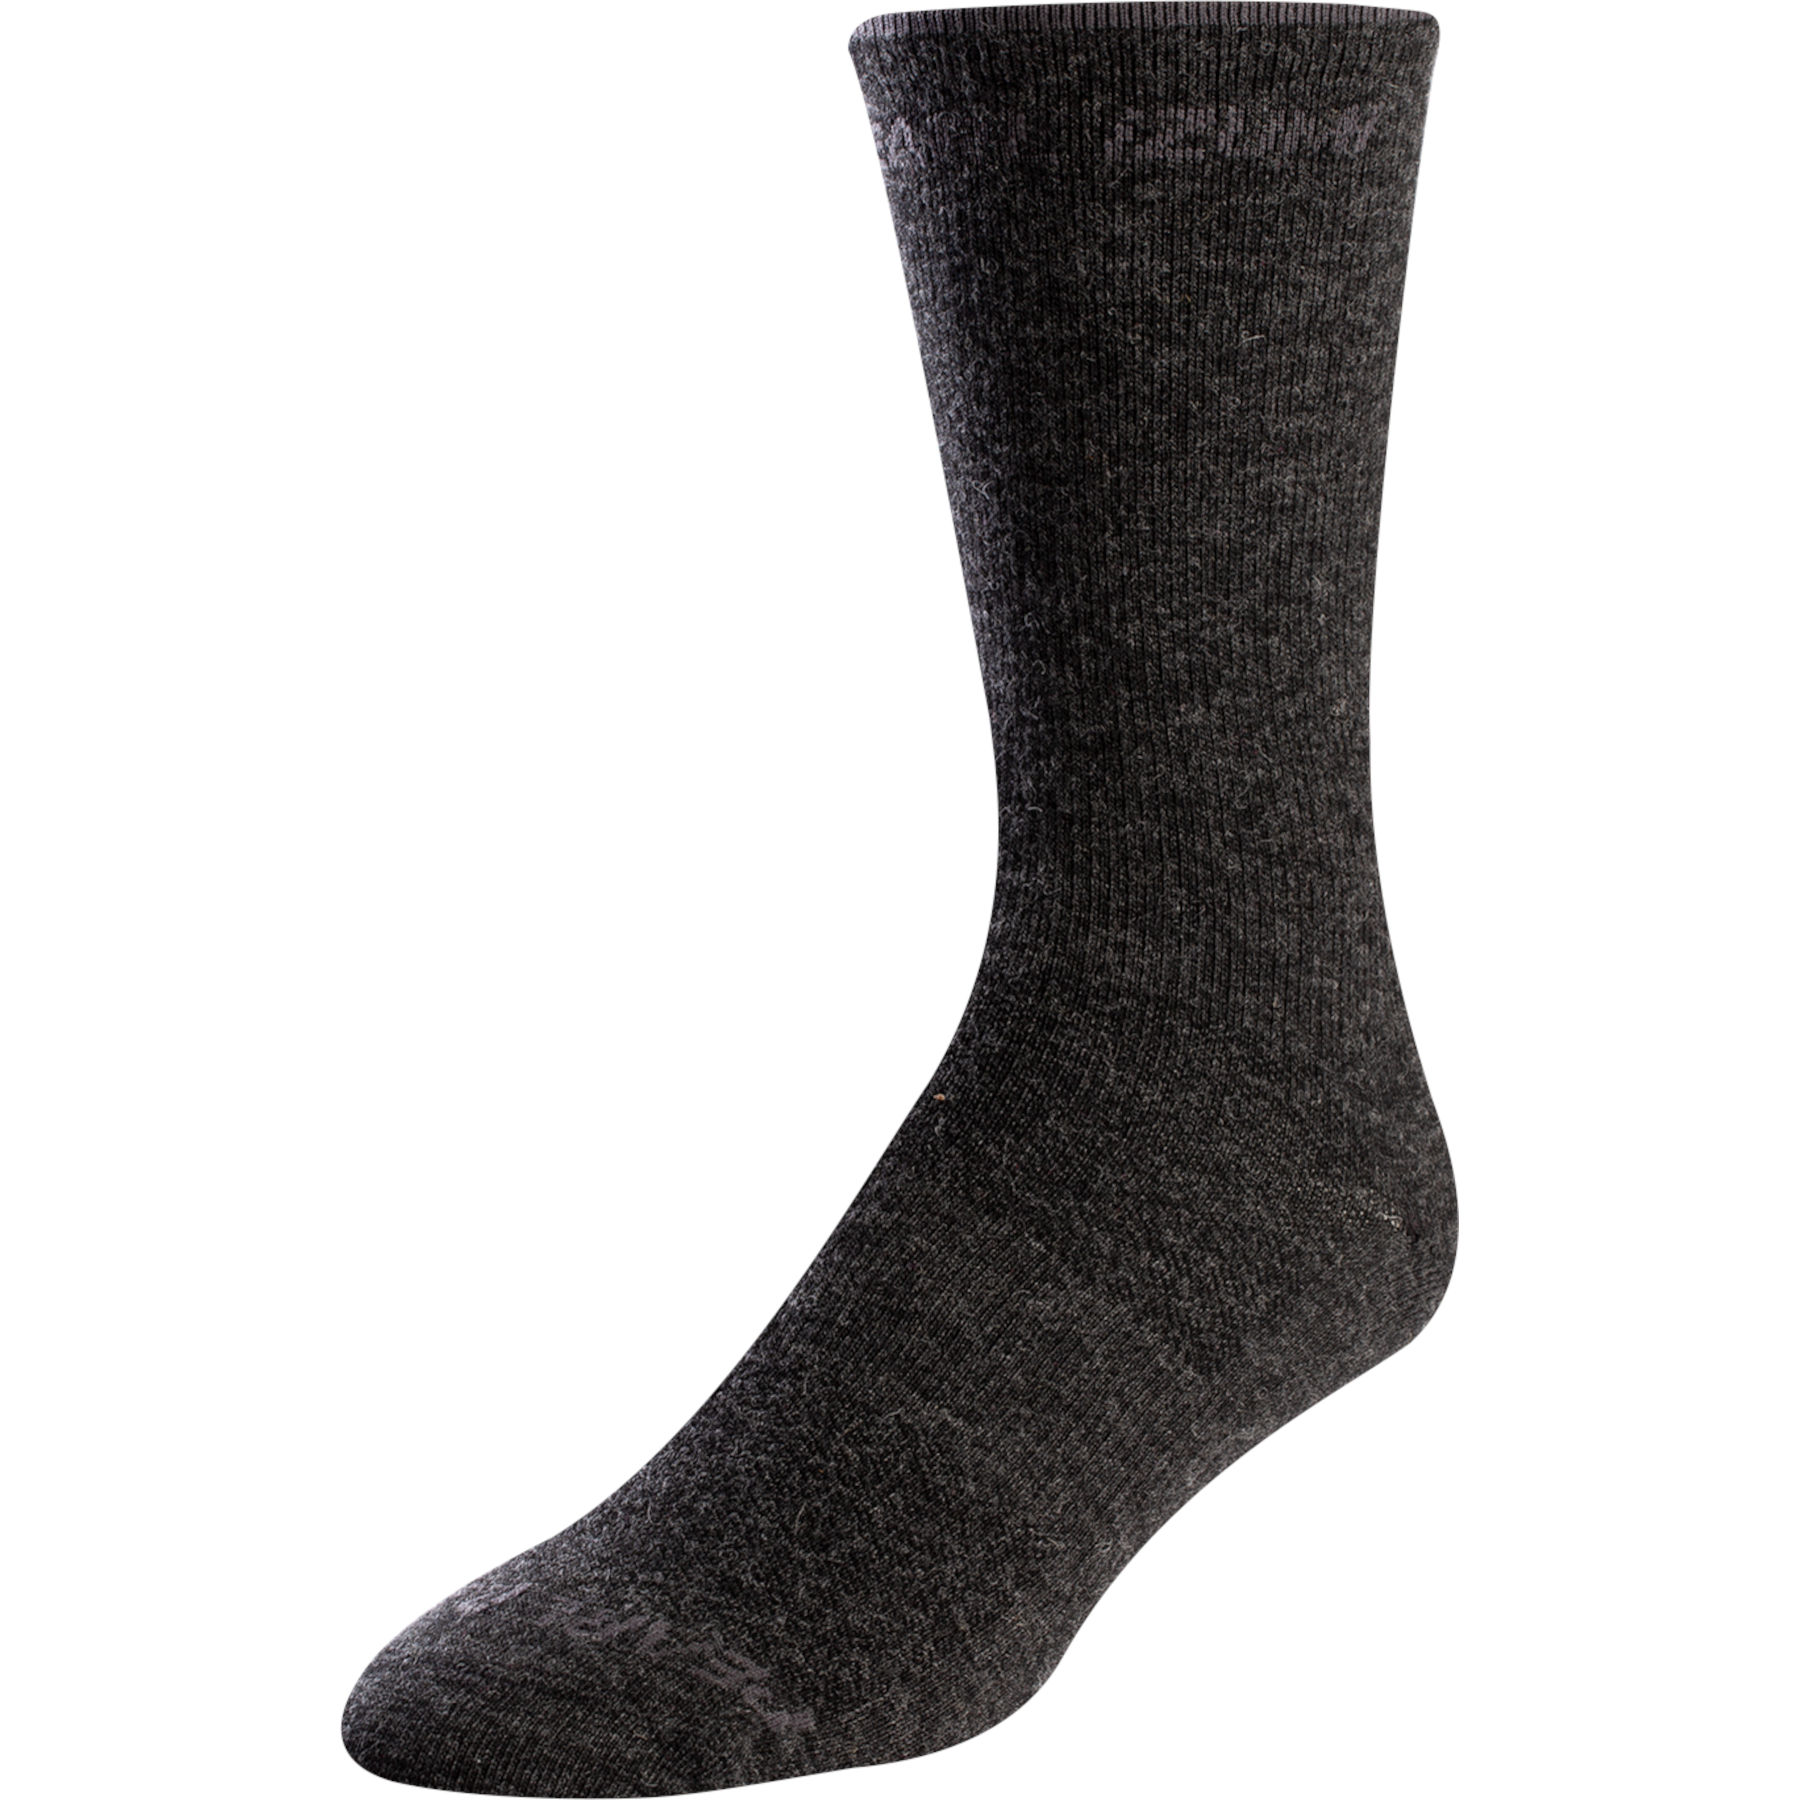 Produktbild von PEARL iZUMi Merino Tall Wool Socken 14351902 - phantom core - 6PW